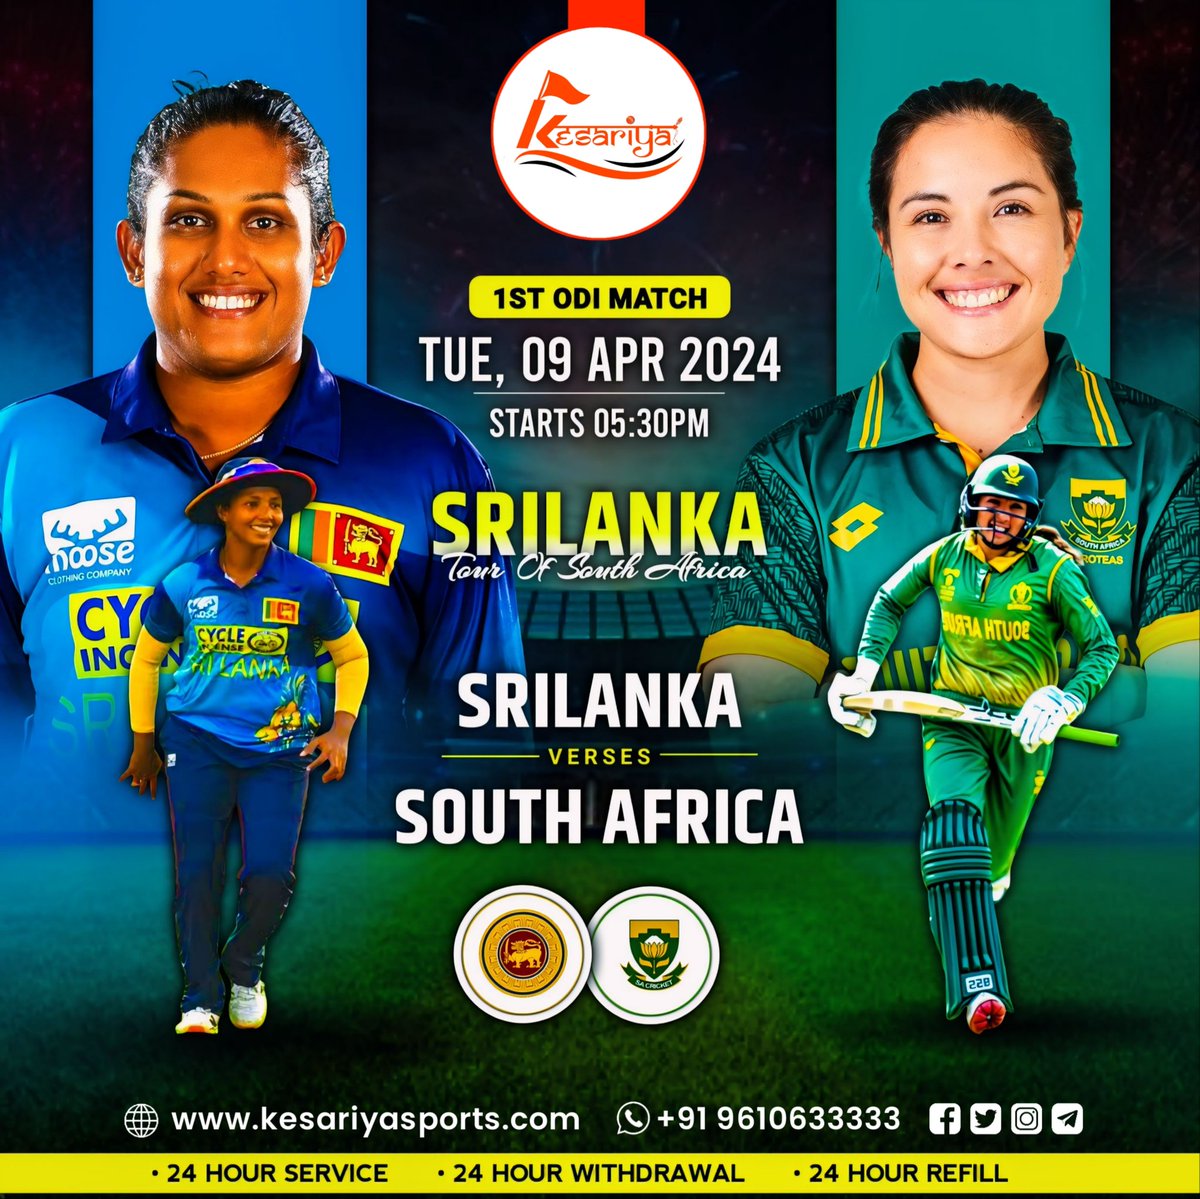 😎 𝐇𝐢𝐭 𝐅𝐨𝐫 𝐒𝐢𝐱𝐞𝐬, 𝐖𝐢𝐧 𝐁𝐢𝐠 𝐎𝐧 𝐓𝐡𝐞 𝐏𝐢𝐭𝐜𝐡 😎

🏏 South Africa Women VS Sri Lanka Women  🏏

🌐 𝐖𝐞𝐛𝐬𝐢𝐭𝐞:-
kesariyasports.com

#womencricket #Salaar #Ramadan